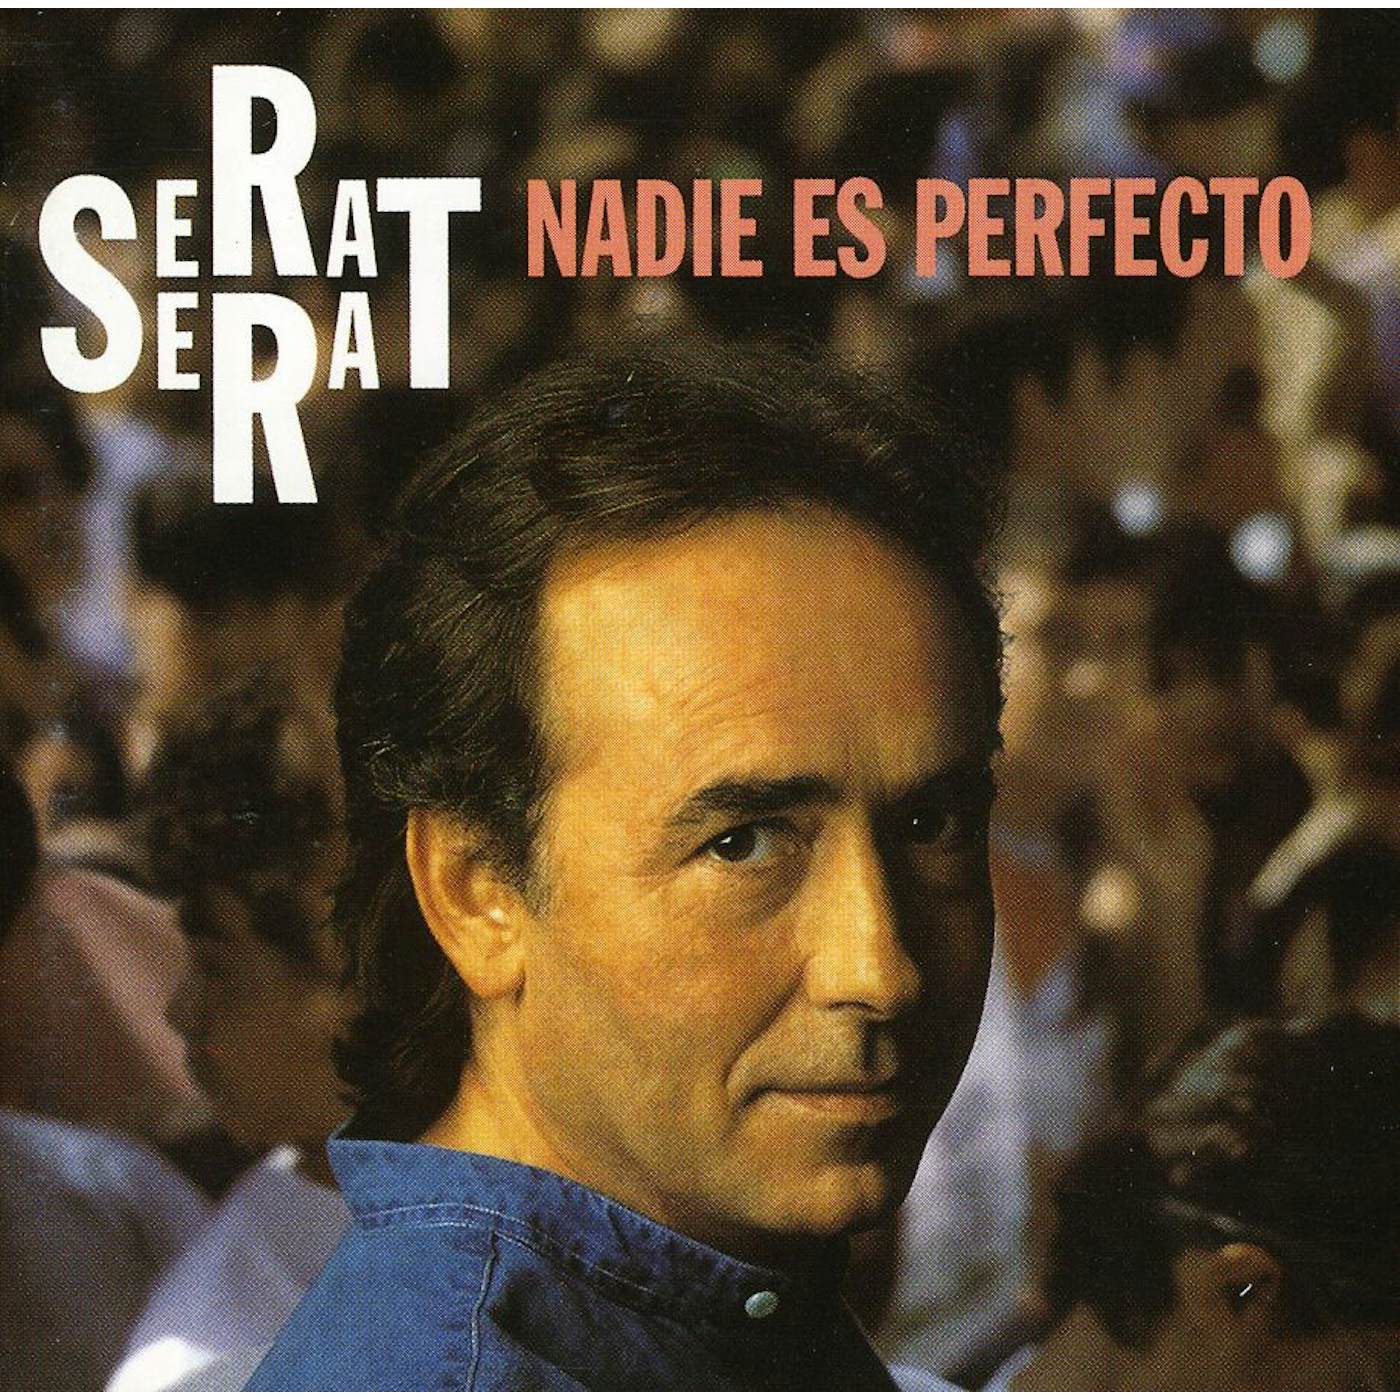 Joan Manuel Serrat NADIE ES PERFECTO CD